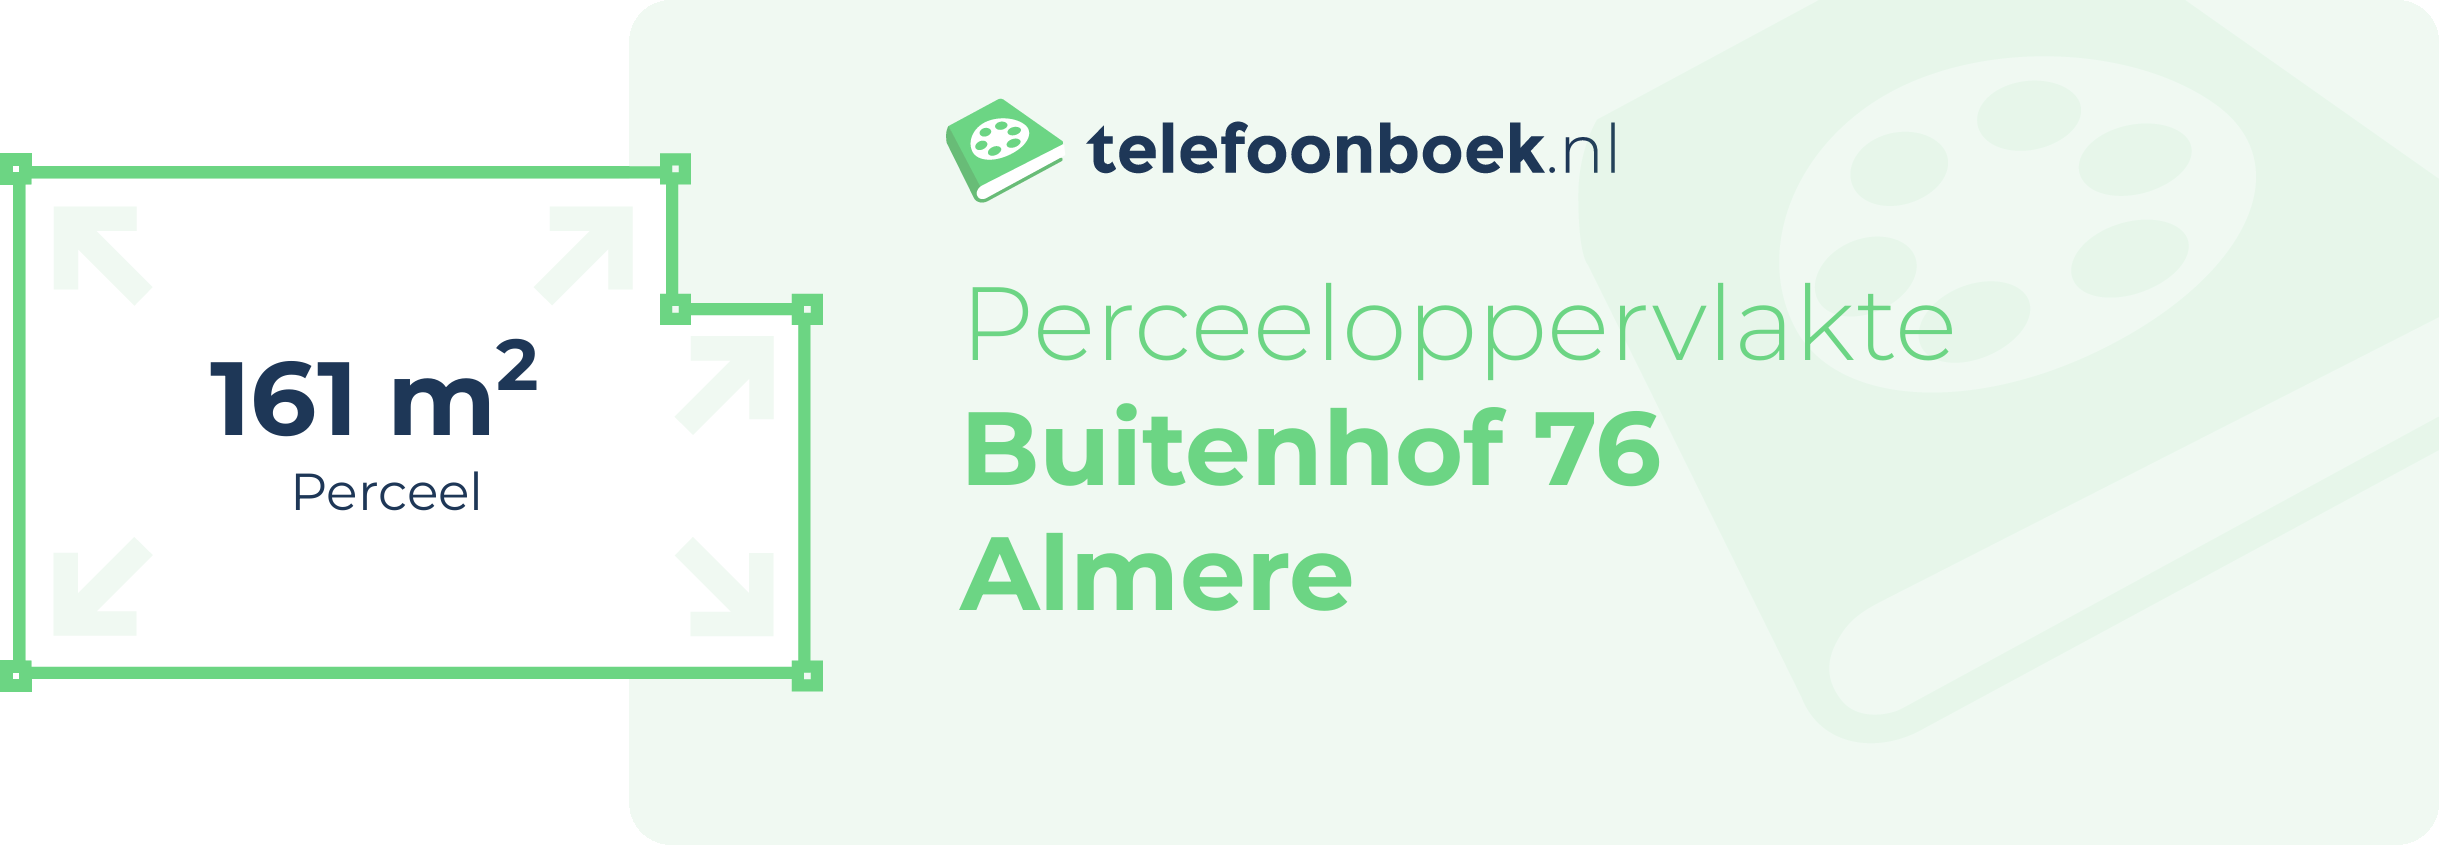 Perceeloppervlakte Buitenhof 76 Almere